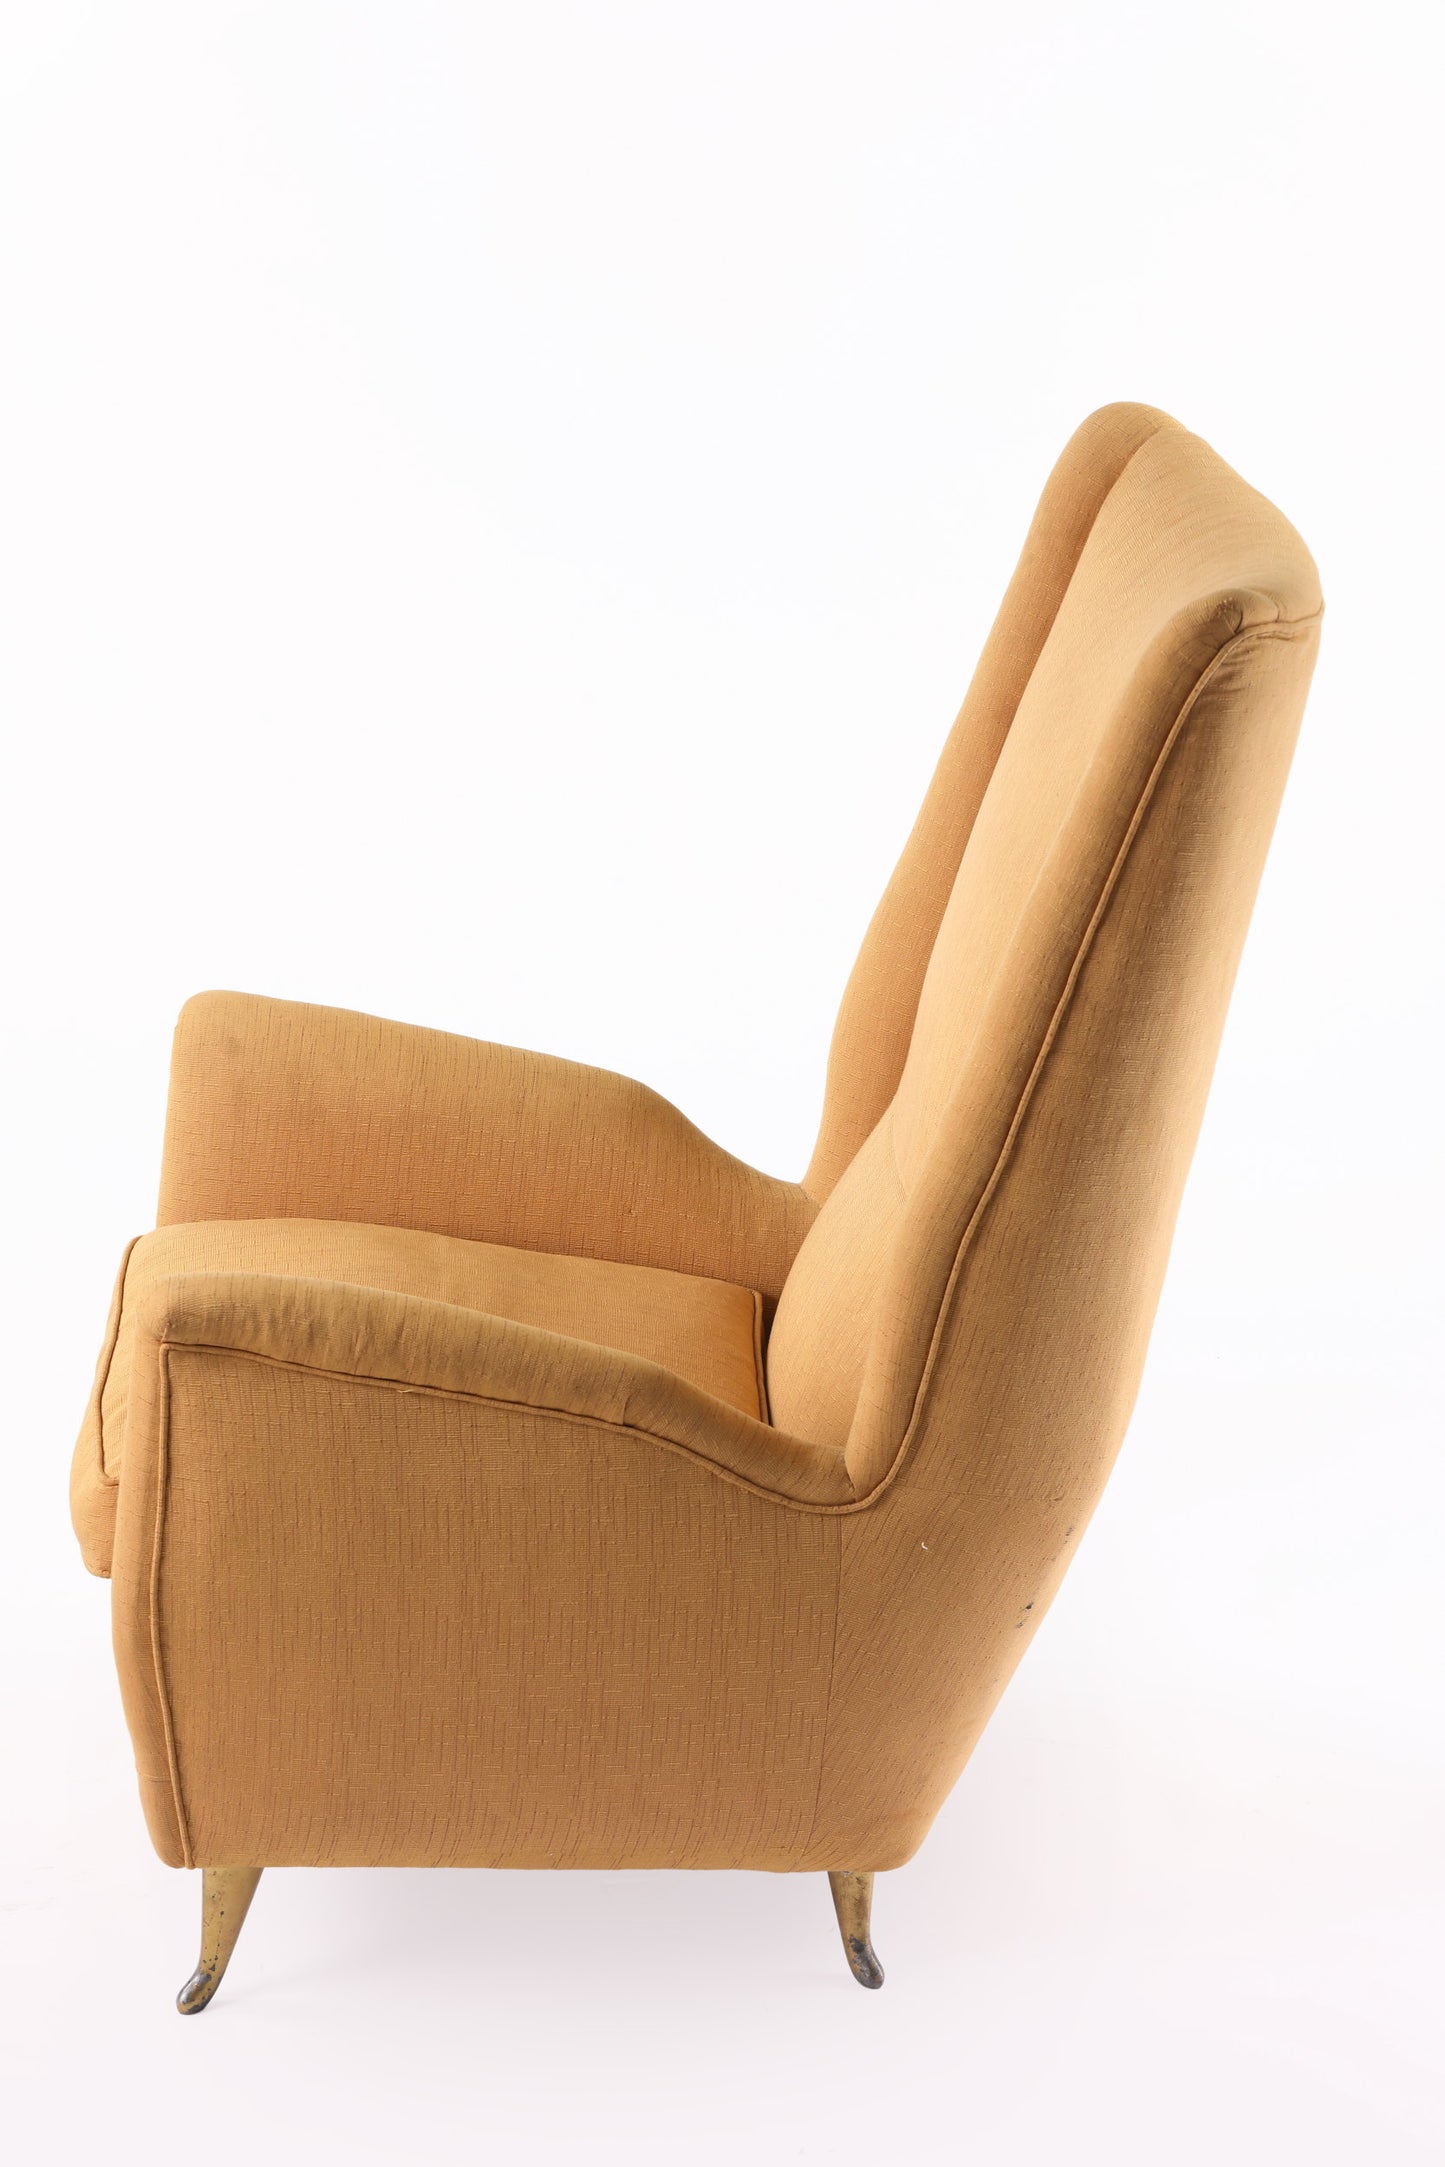 Gio Ponti armchair 1950 for Isa Bergamo